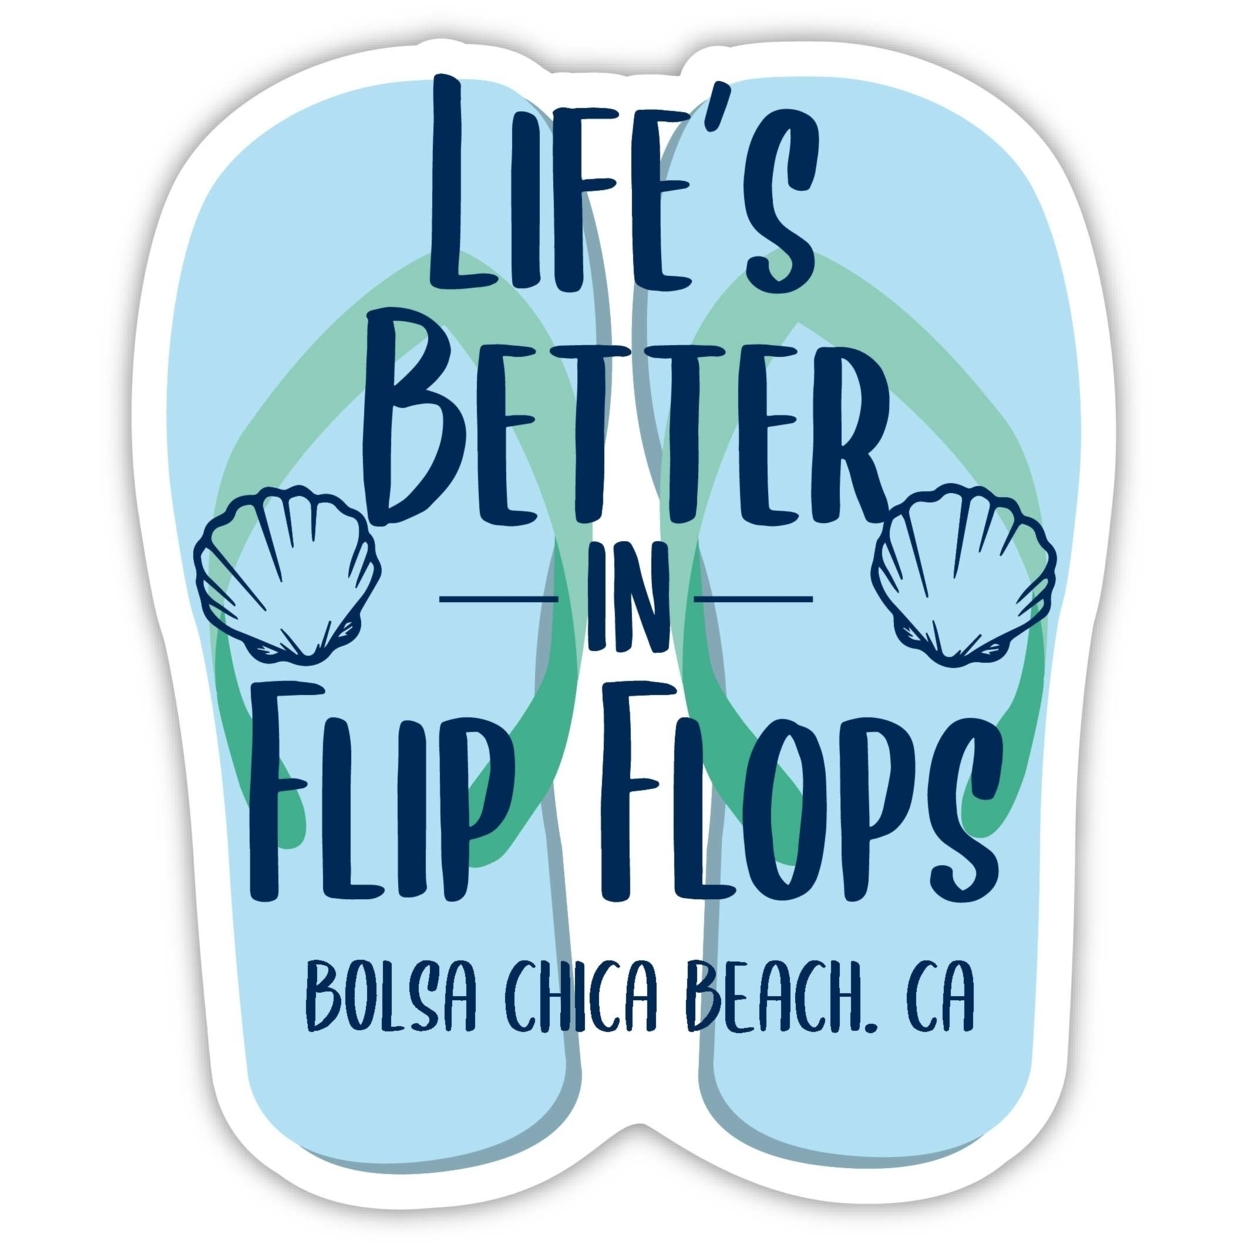 Bolsa Chica Beach California Souvenir 4 Inch Vinyl Decal Sticker Flip Flop Design